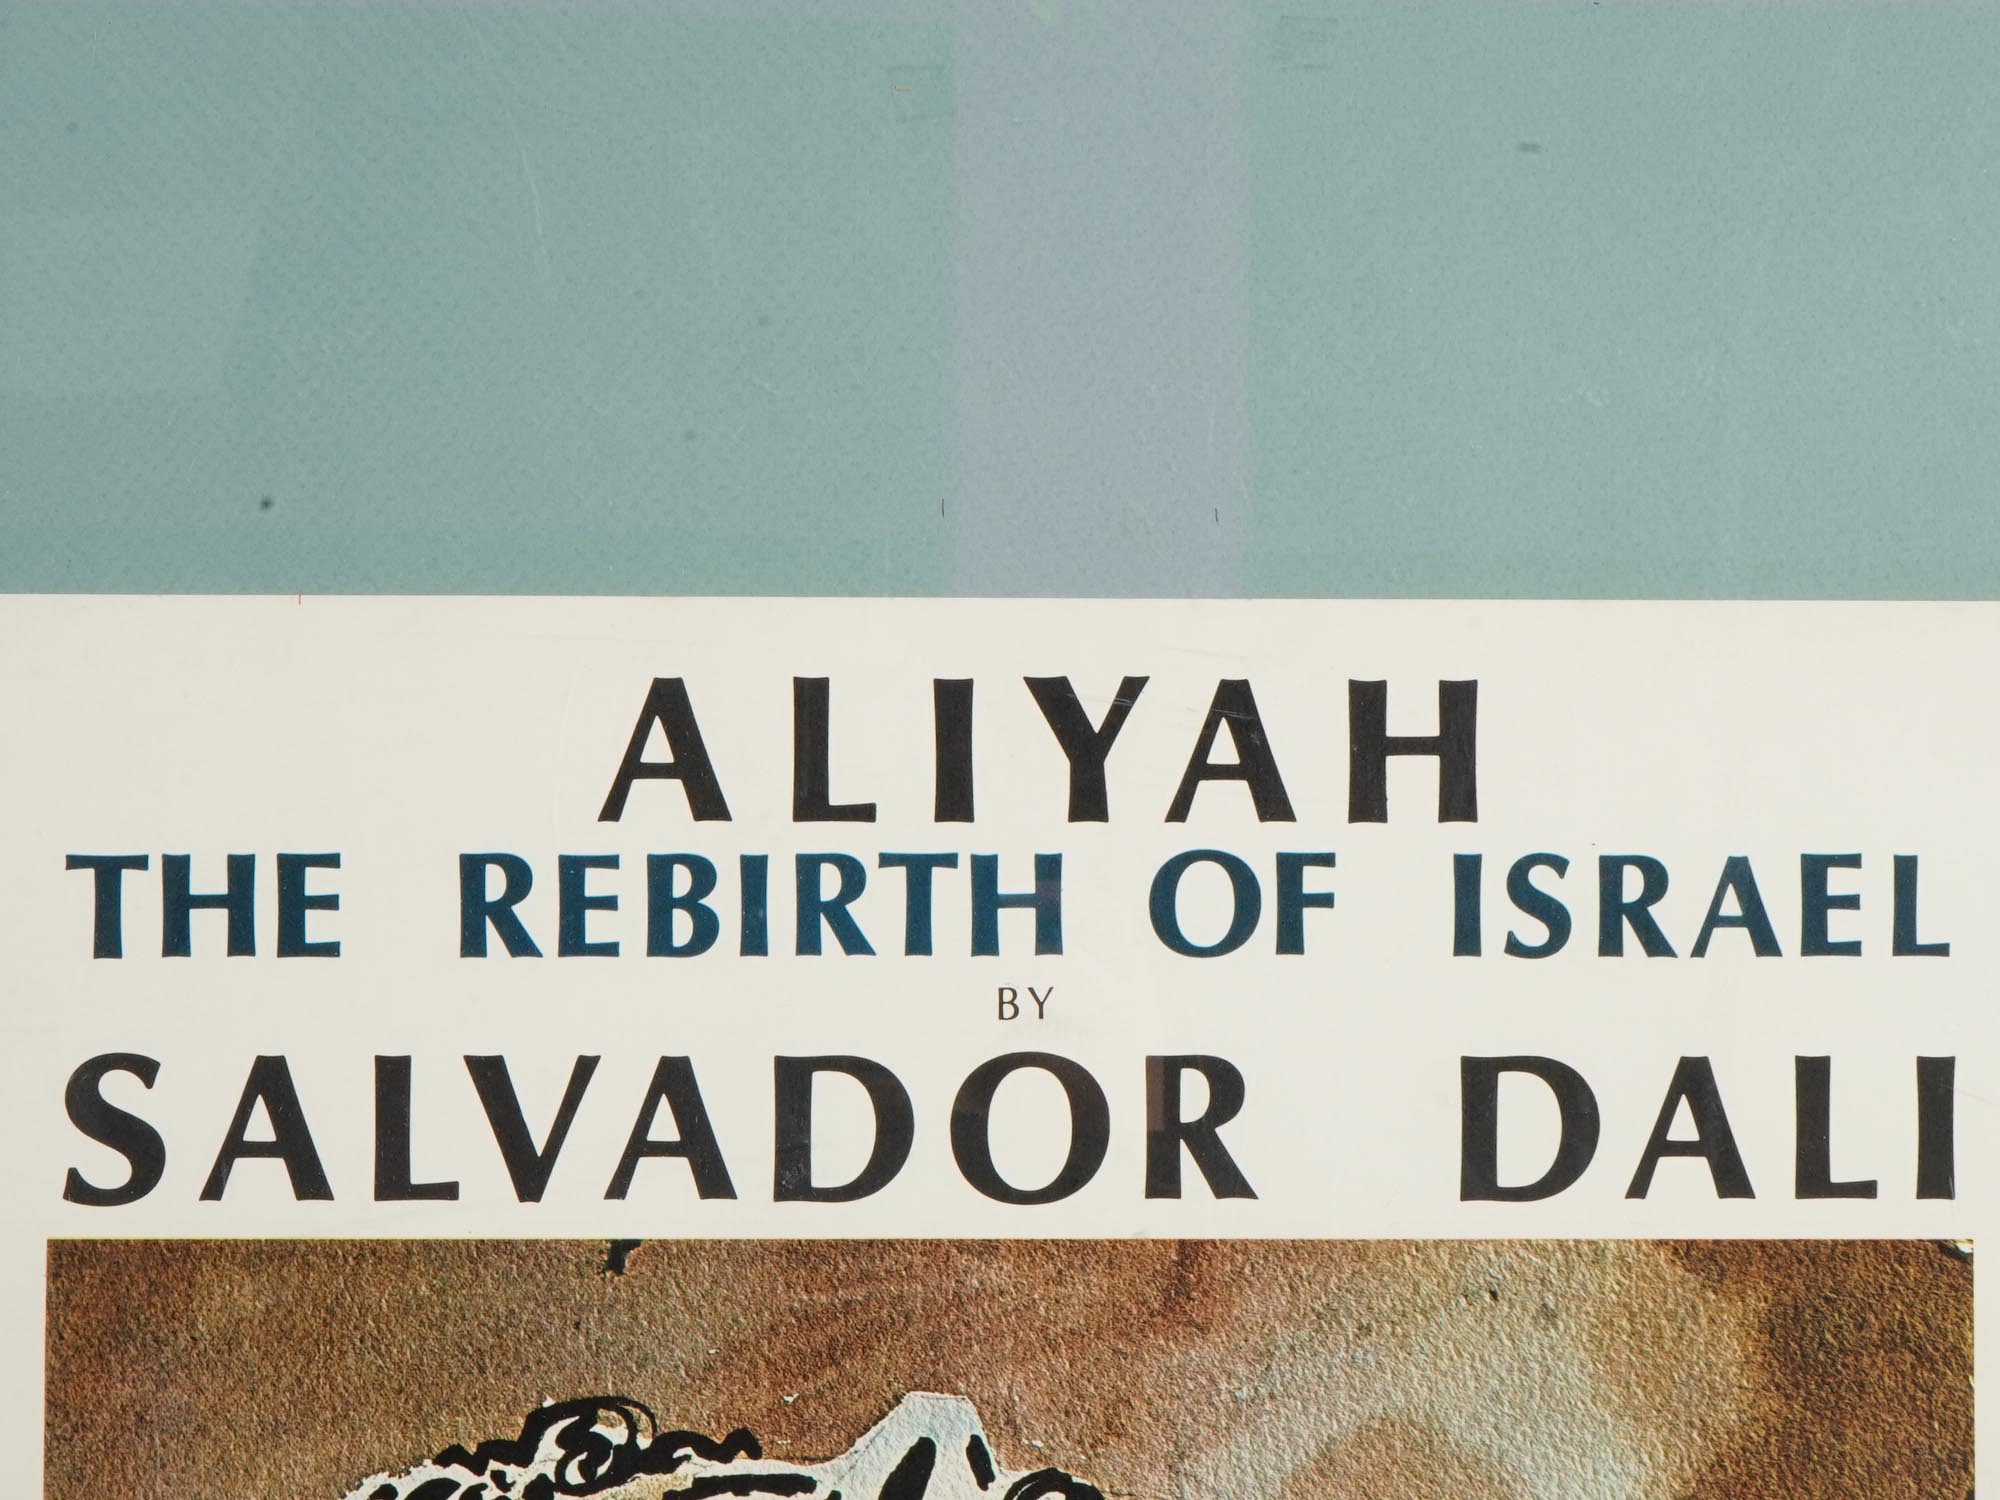 SALVADOR DALI ALIYAH ISRAEL GALLERY LITHOGRAPH POSTER PIC-3